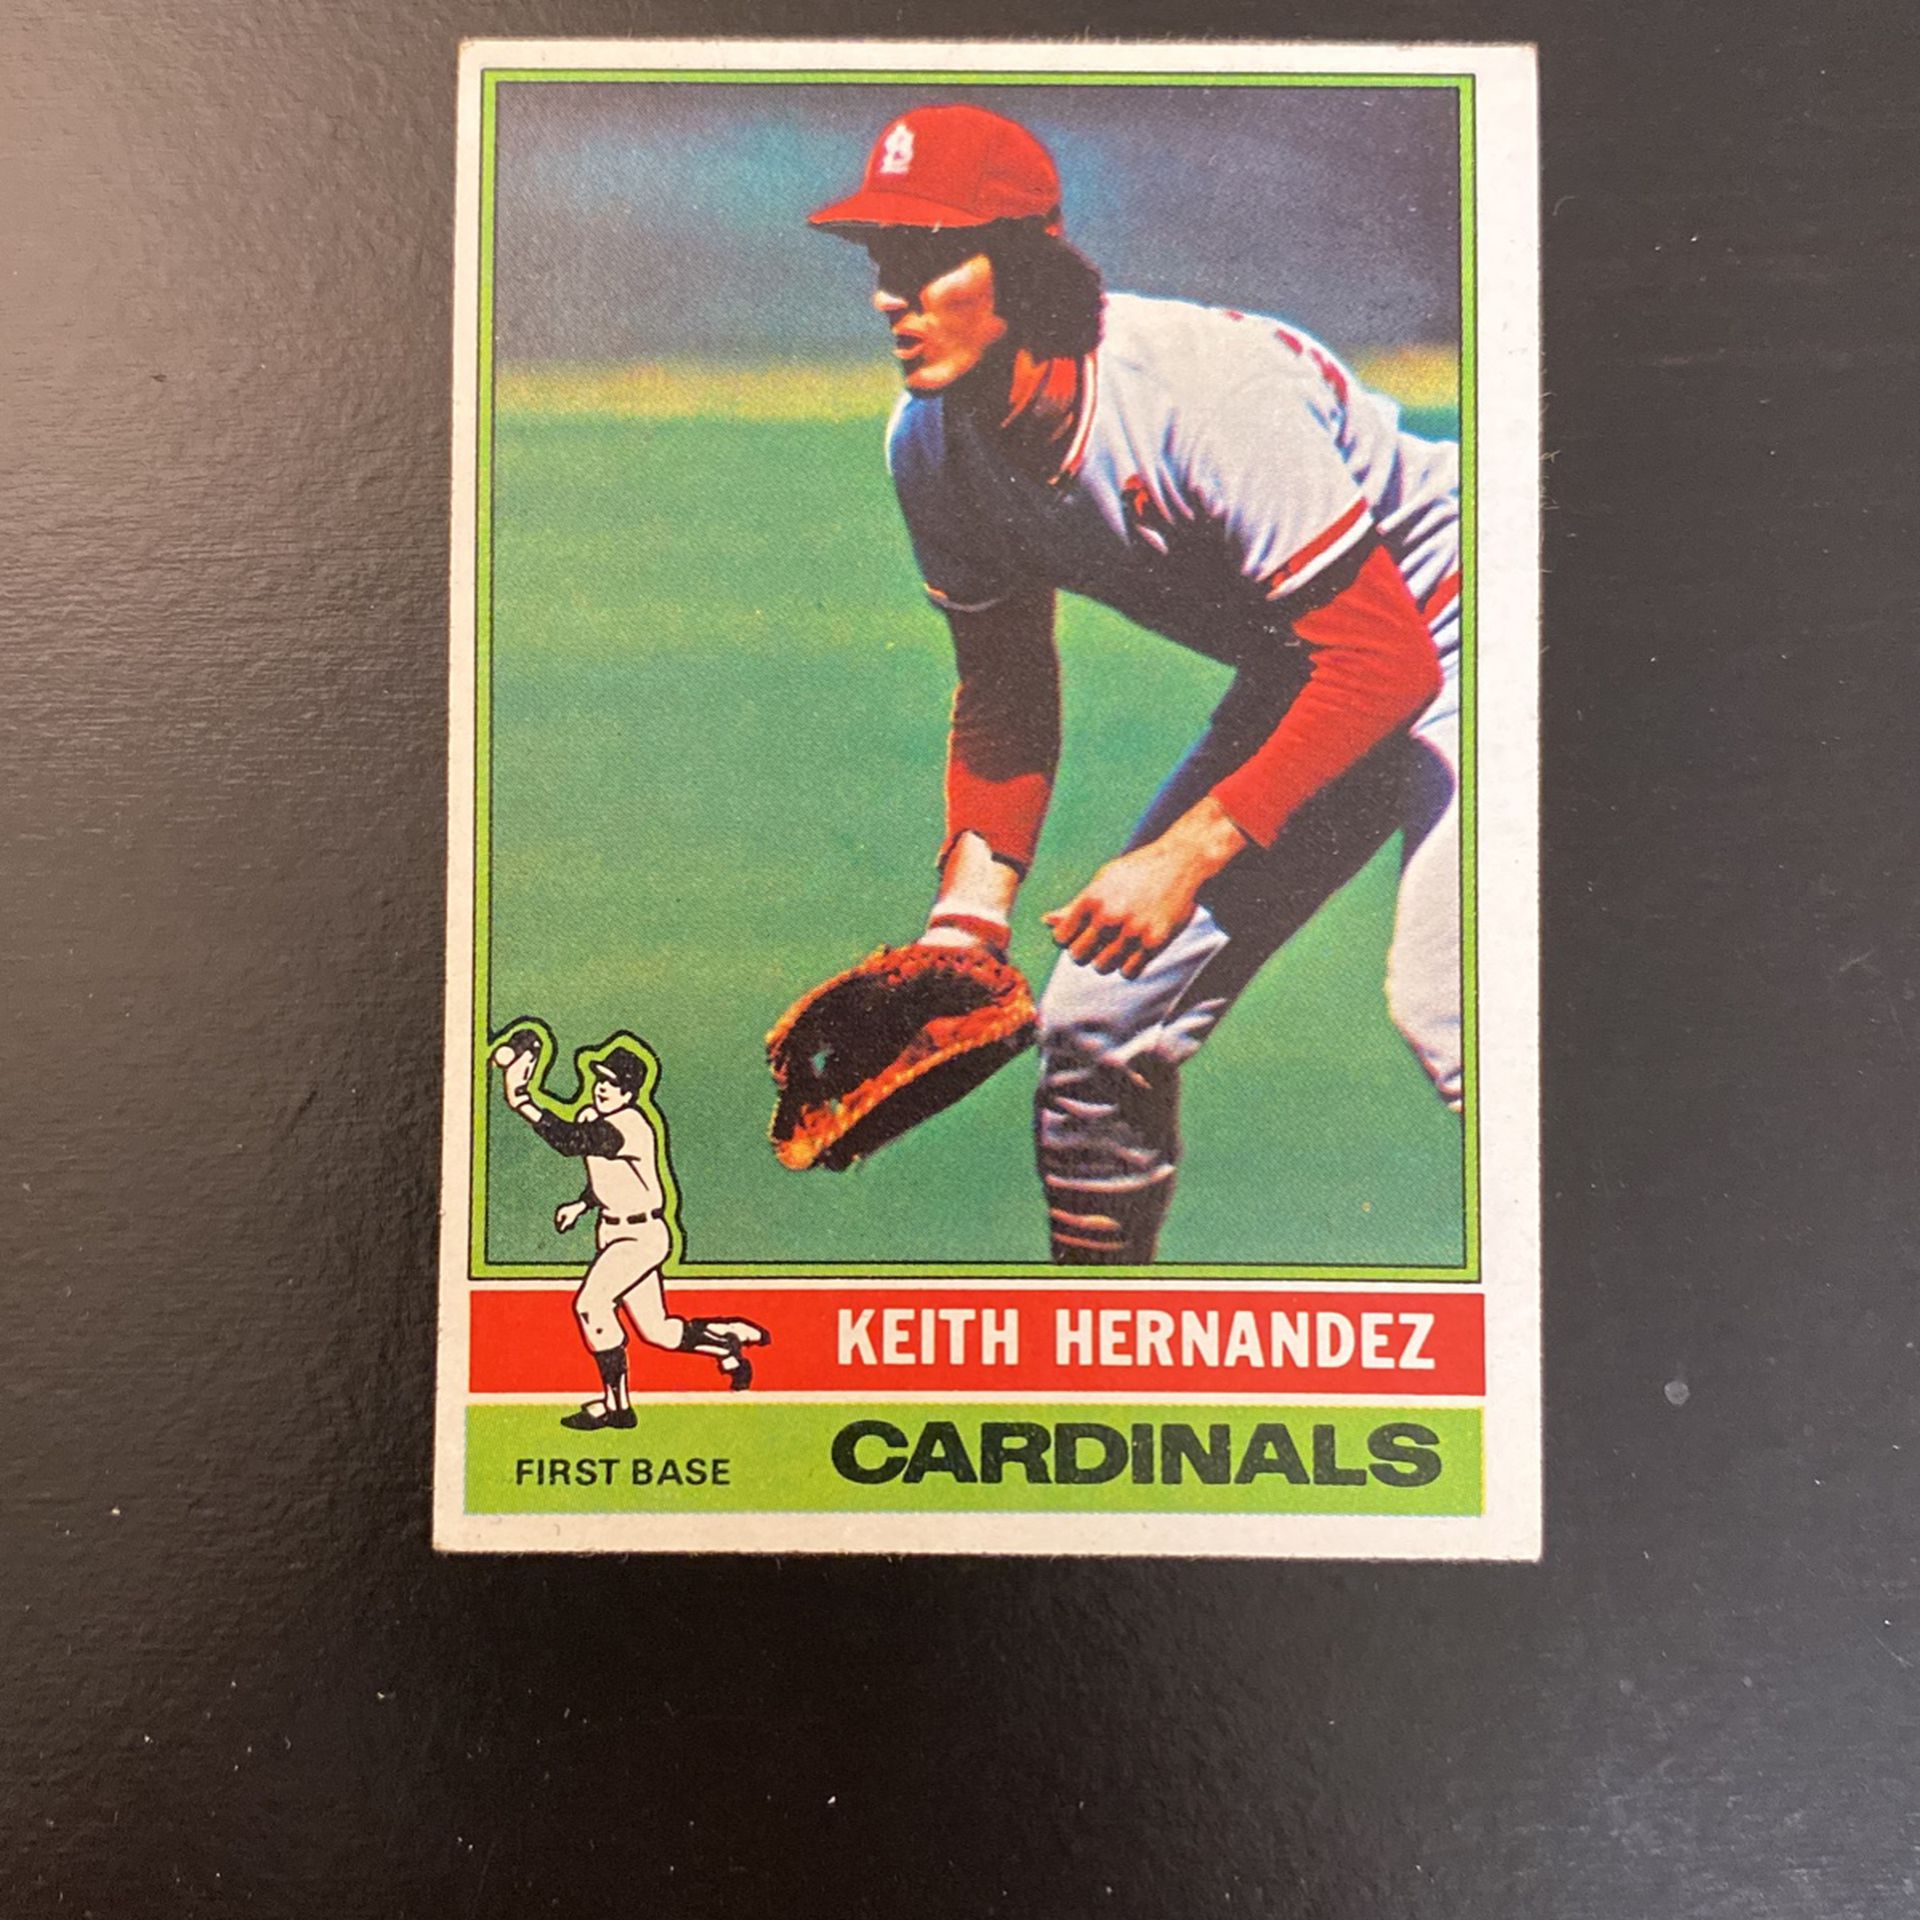 1976 Keith Hernandez Baseball Card for Sale in Fair Lawn, NJ - OfferUp